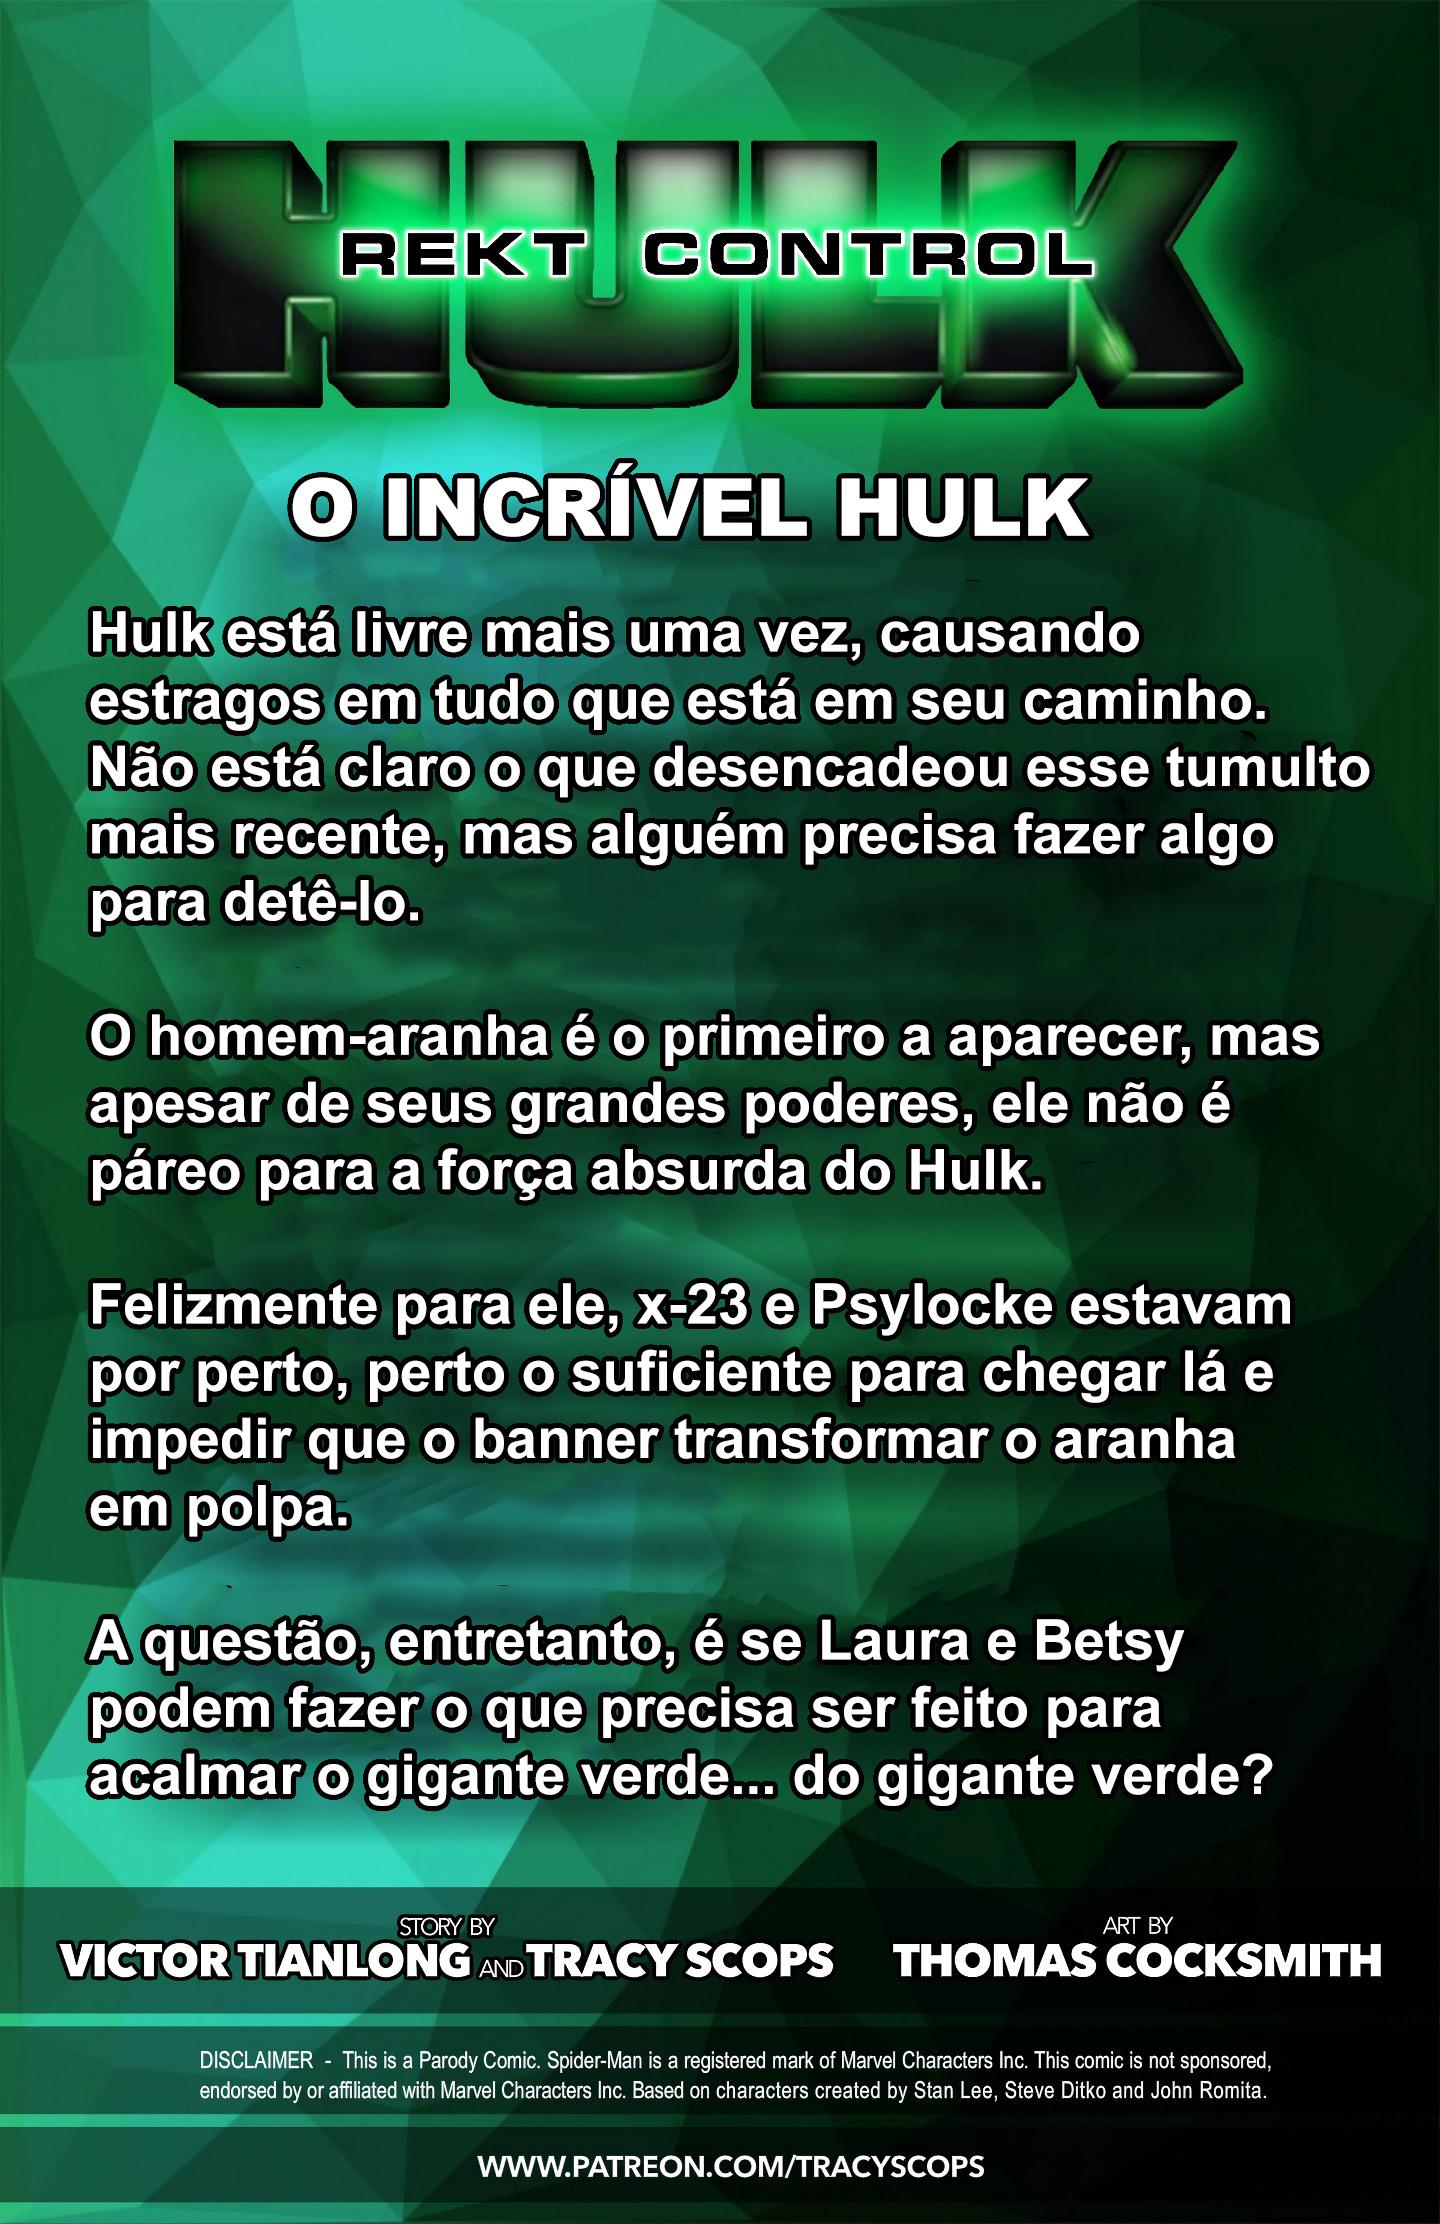 Hulk arromba buceta das heroínas 02 - Foto 2